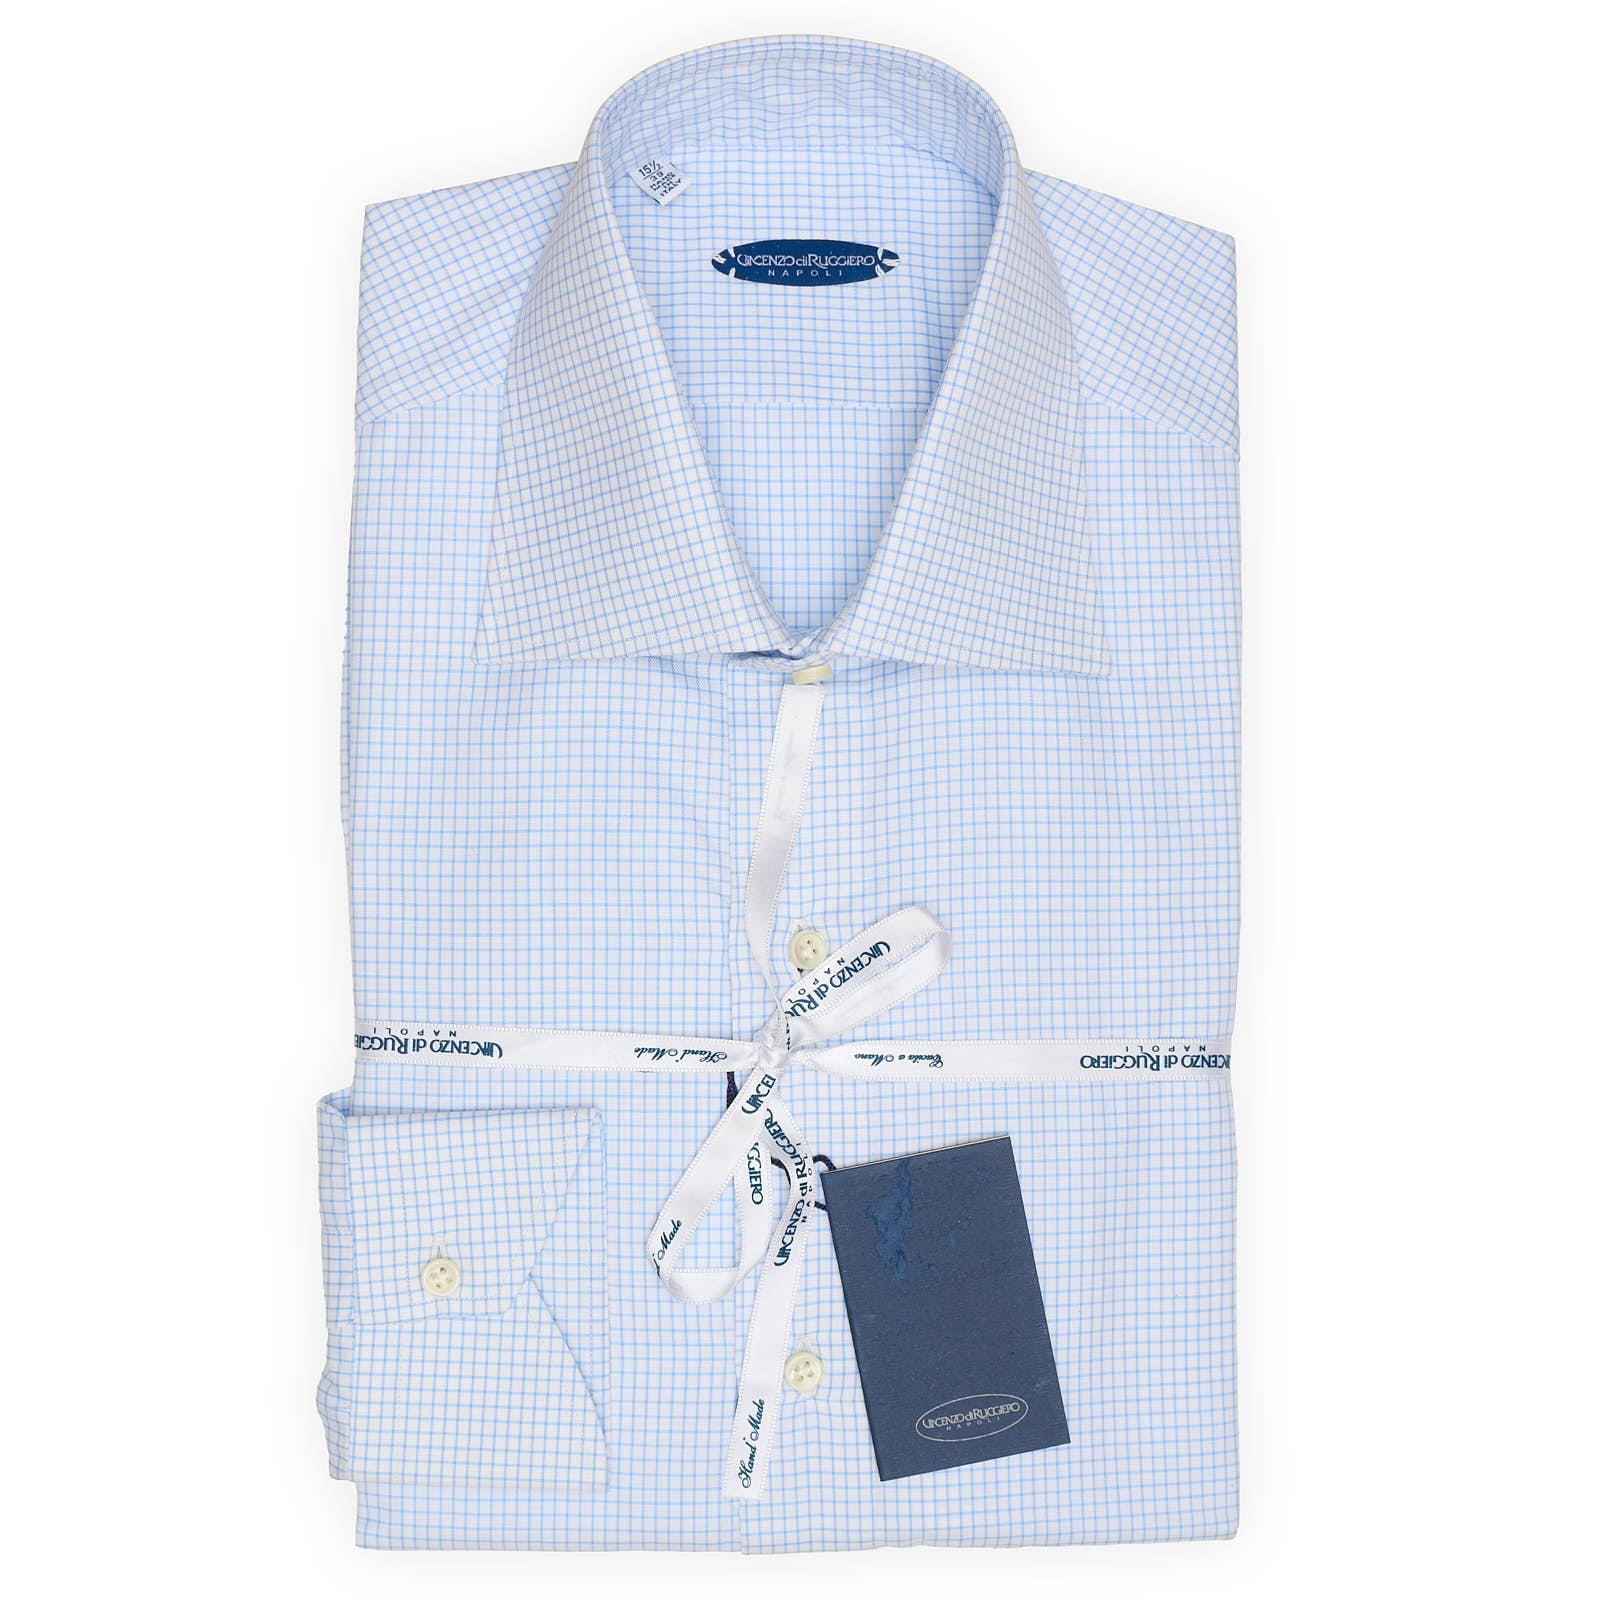 VINCENZO DI RUGGIERO Handmade Blue Check Twill Dress Shirt EU 39 NEW US 15.5